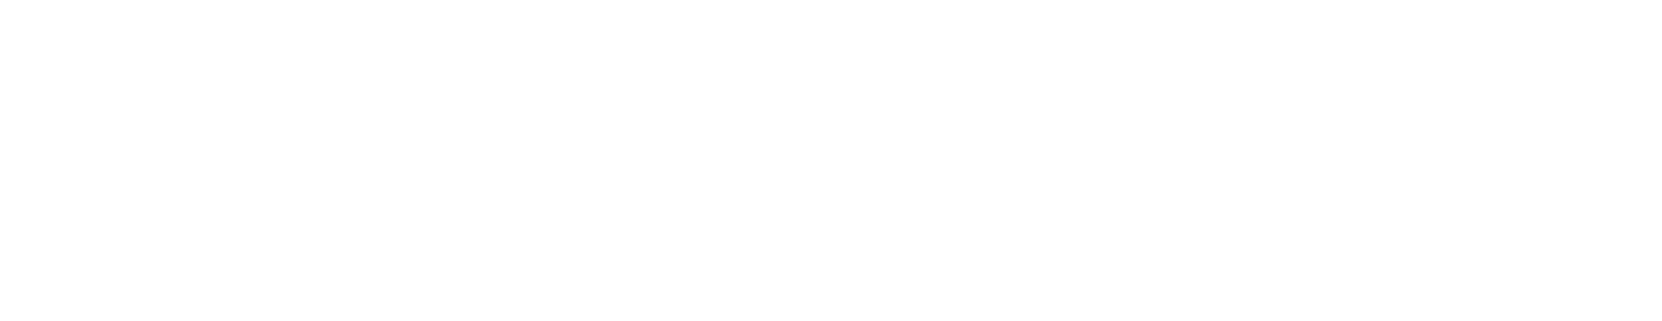 Simona logo large for dark backgrounds (transparent PNG)